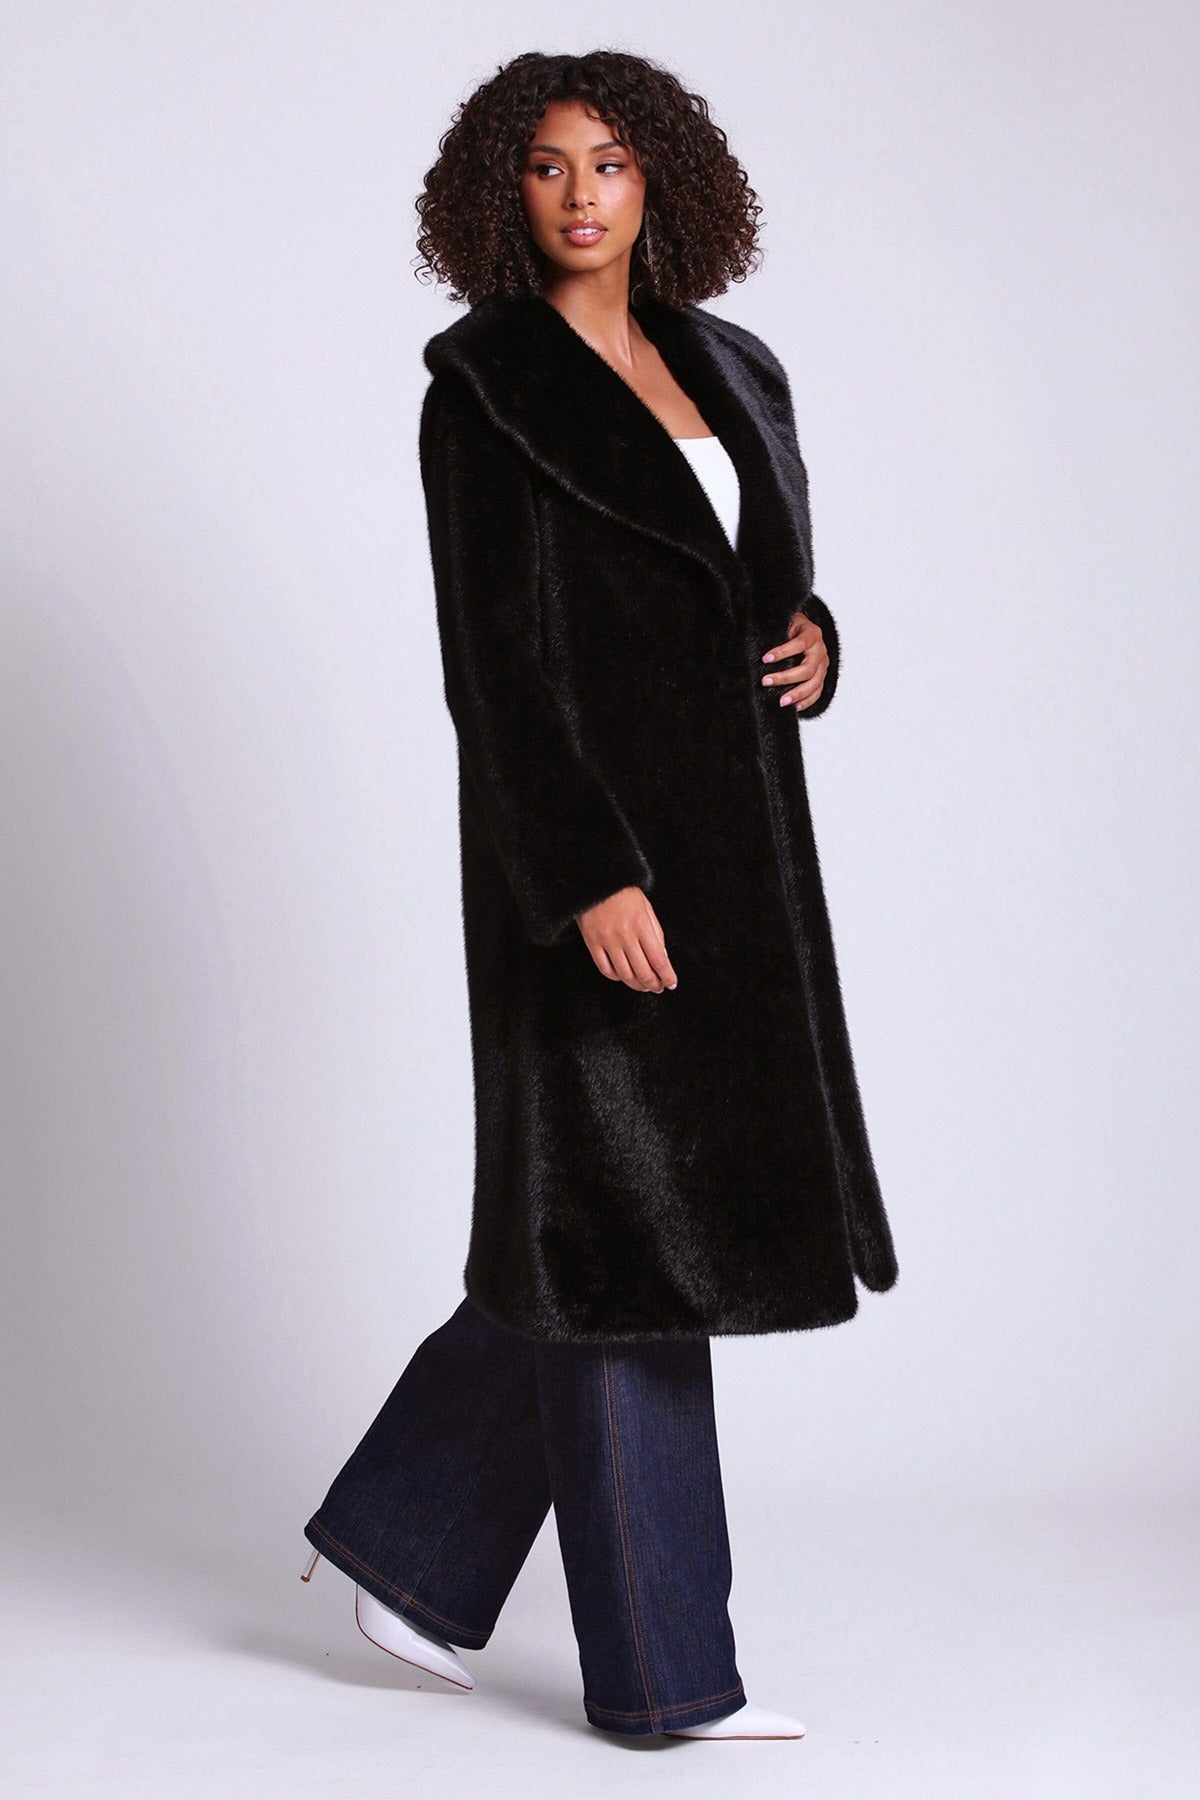 Black shawl collar faux fur long coat jacket - women's figure flattering quiet luxury coats jackets 